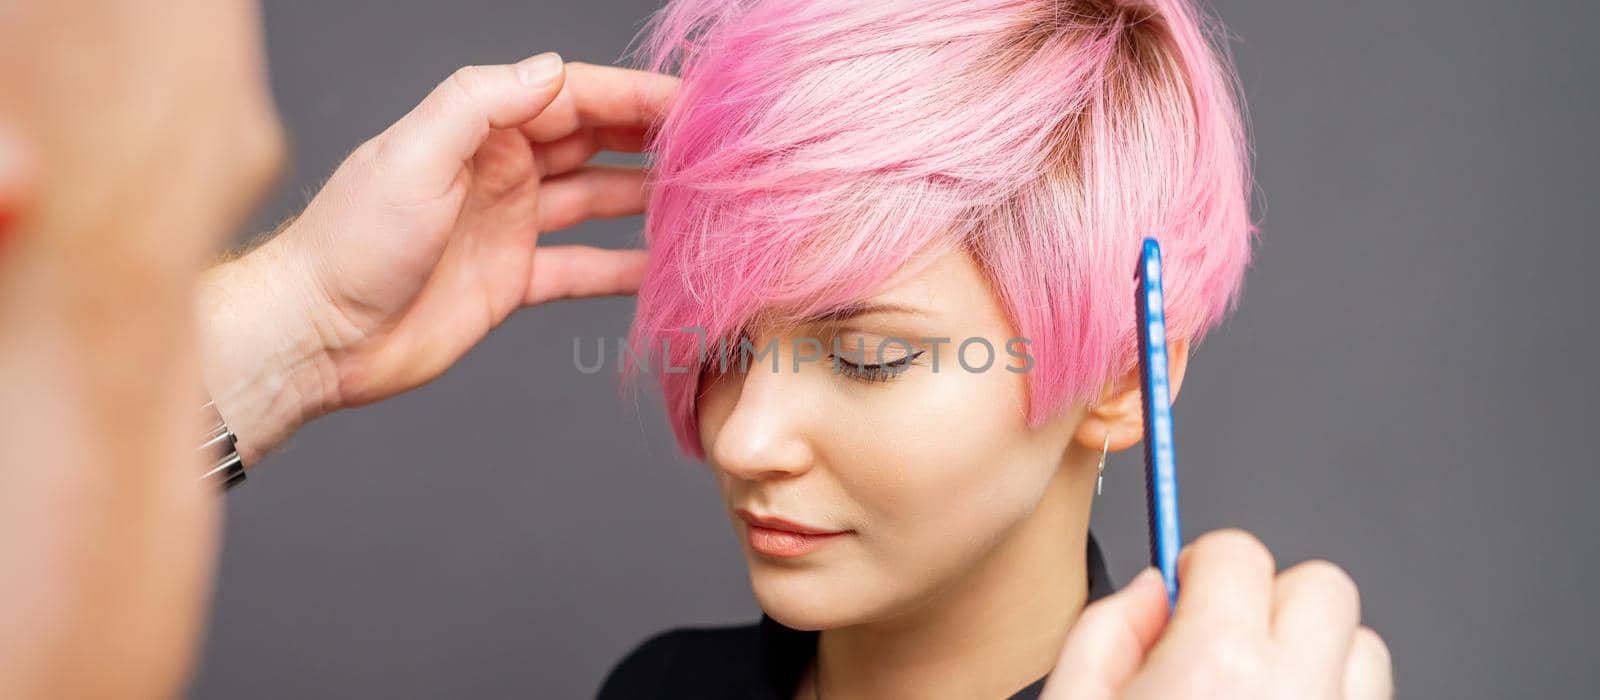 Hairdresser checking woman's pink hairstyle. by okskukuruza